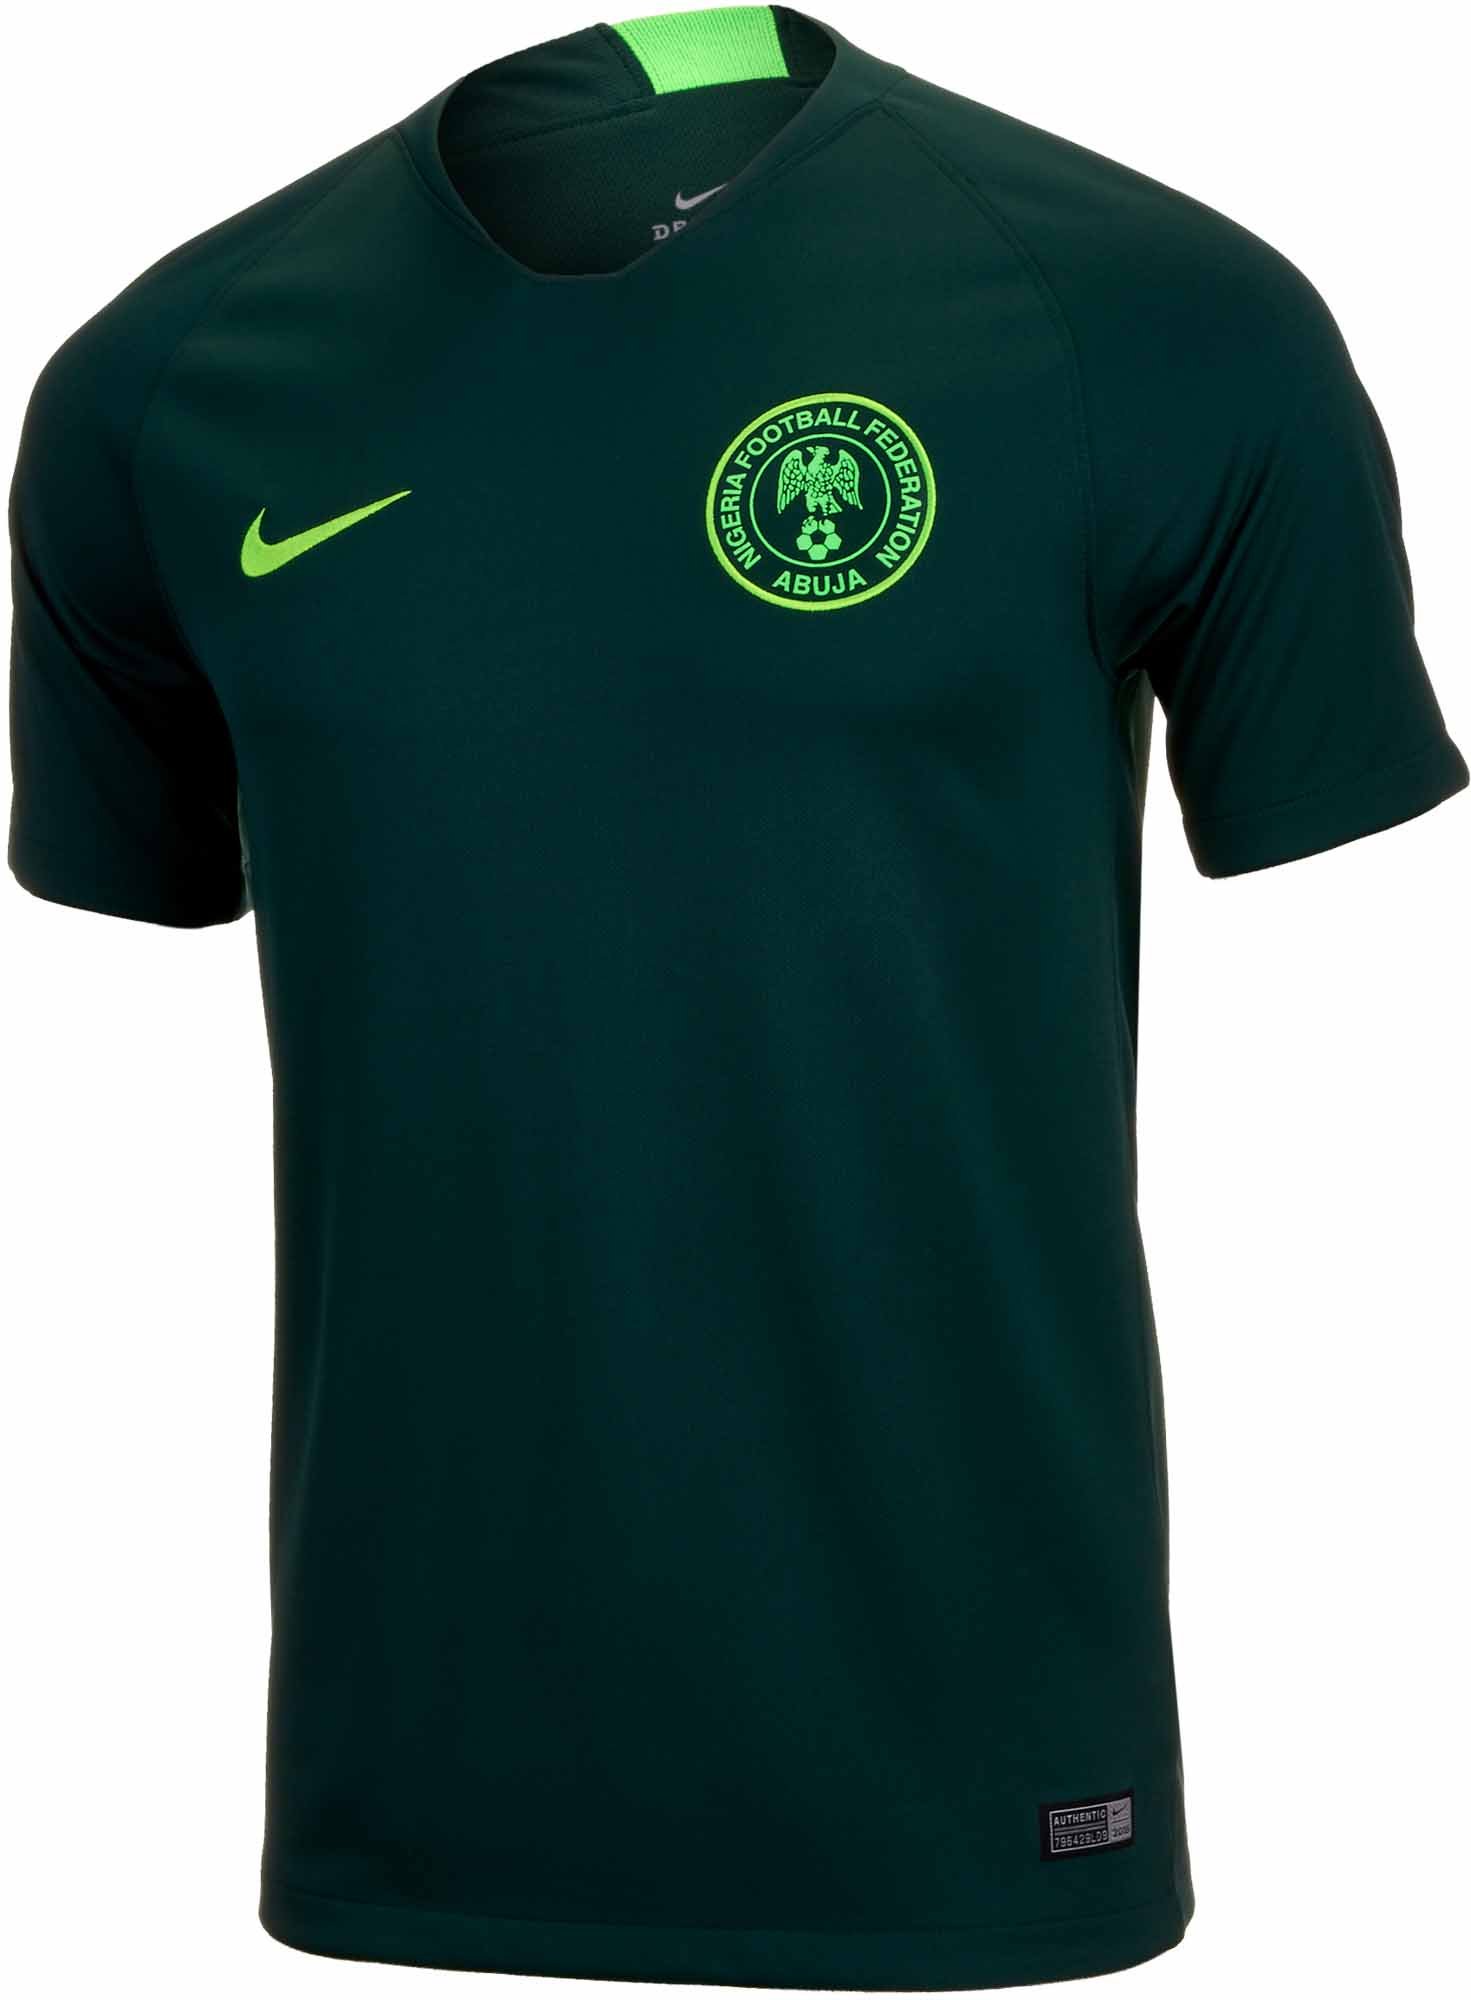 Buy > nike nigeria jersey 2021 > in stock